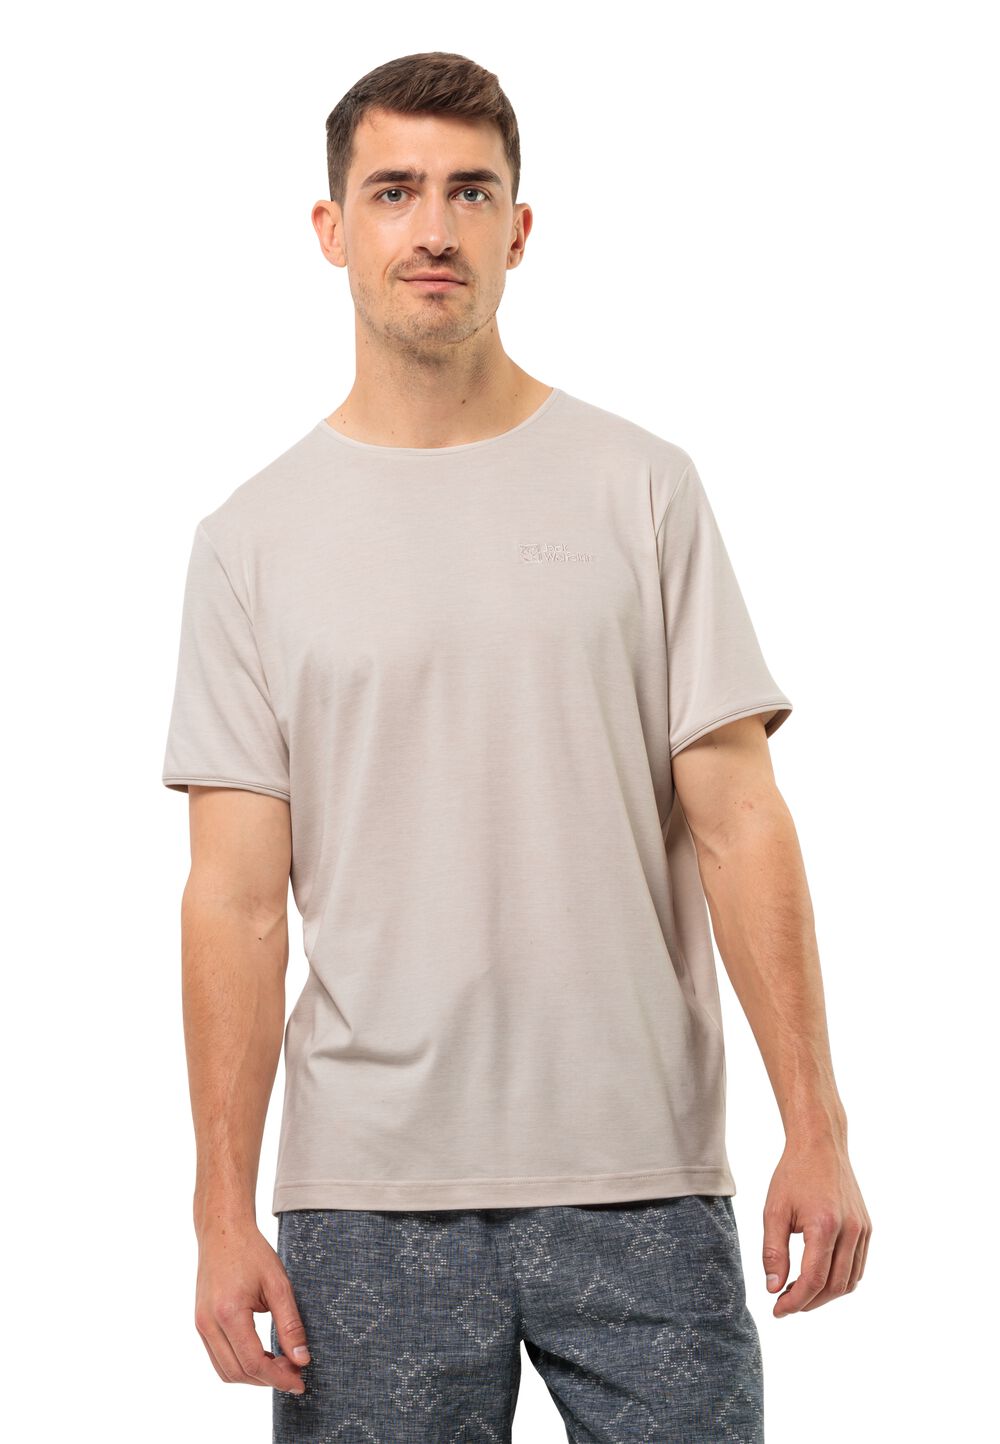 Jack Wolfskin Travel T-Shirt Men Functioneel shirt Heren L sea shell sea shell